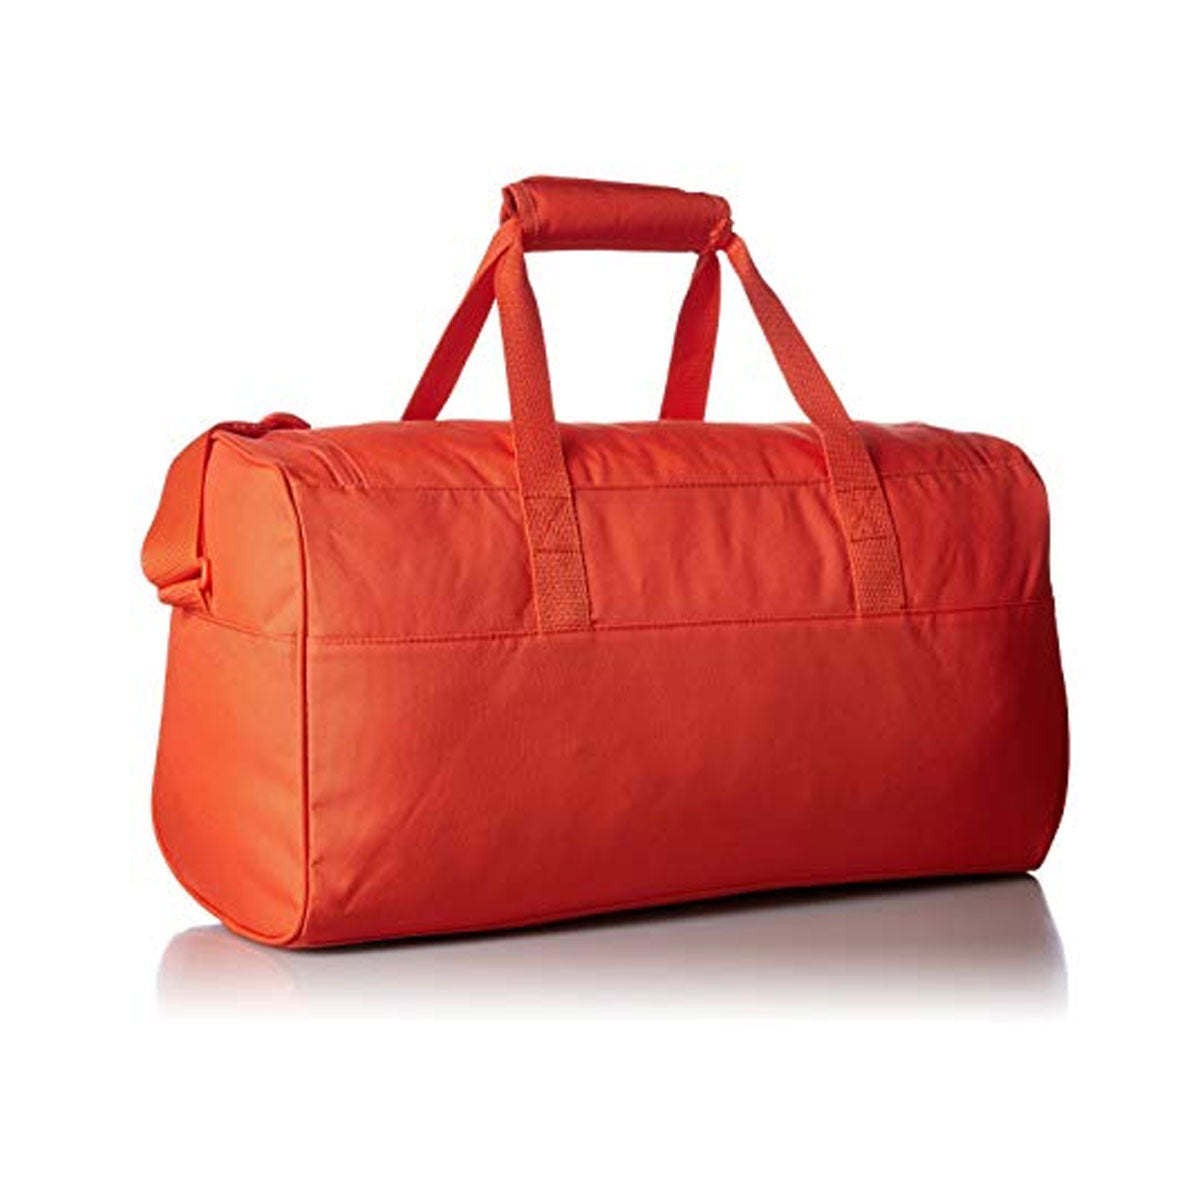 Adidas Unisex Originals Linear Performance Sport Teambag Orange Duffle Gym Bag